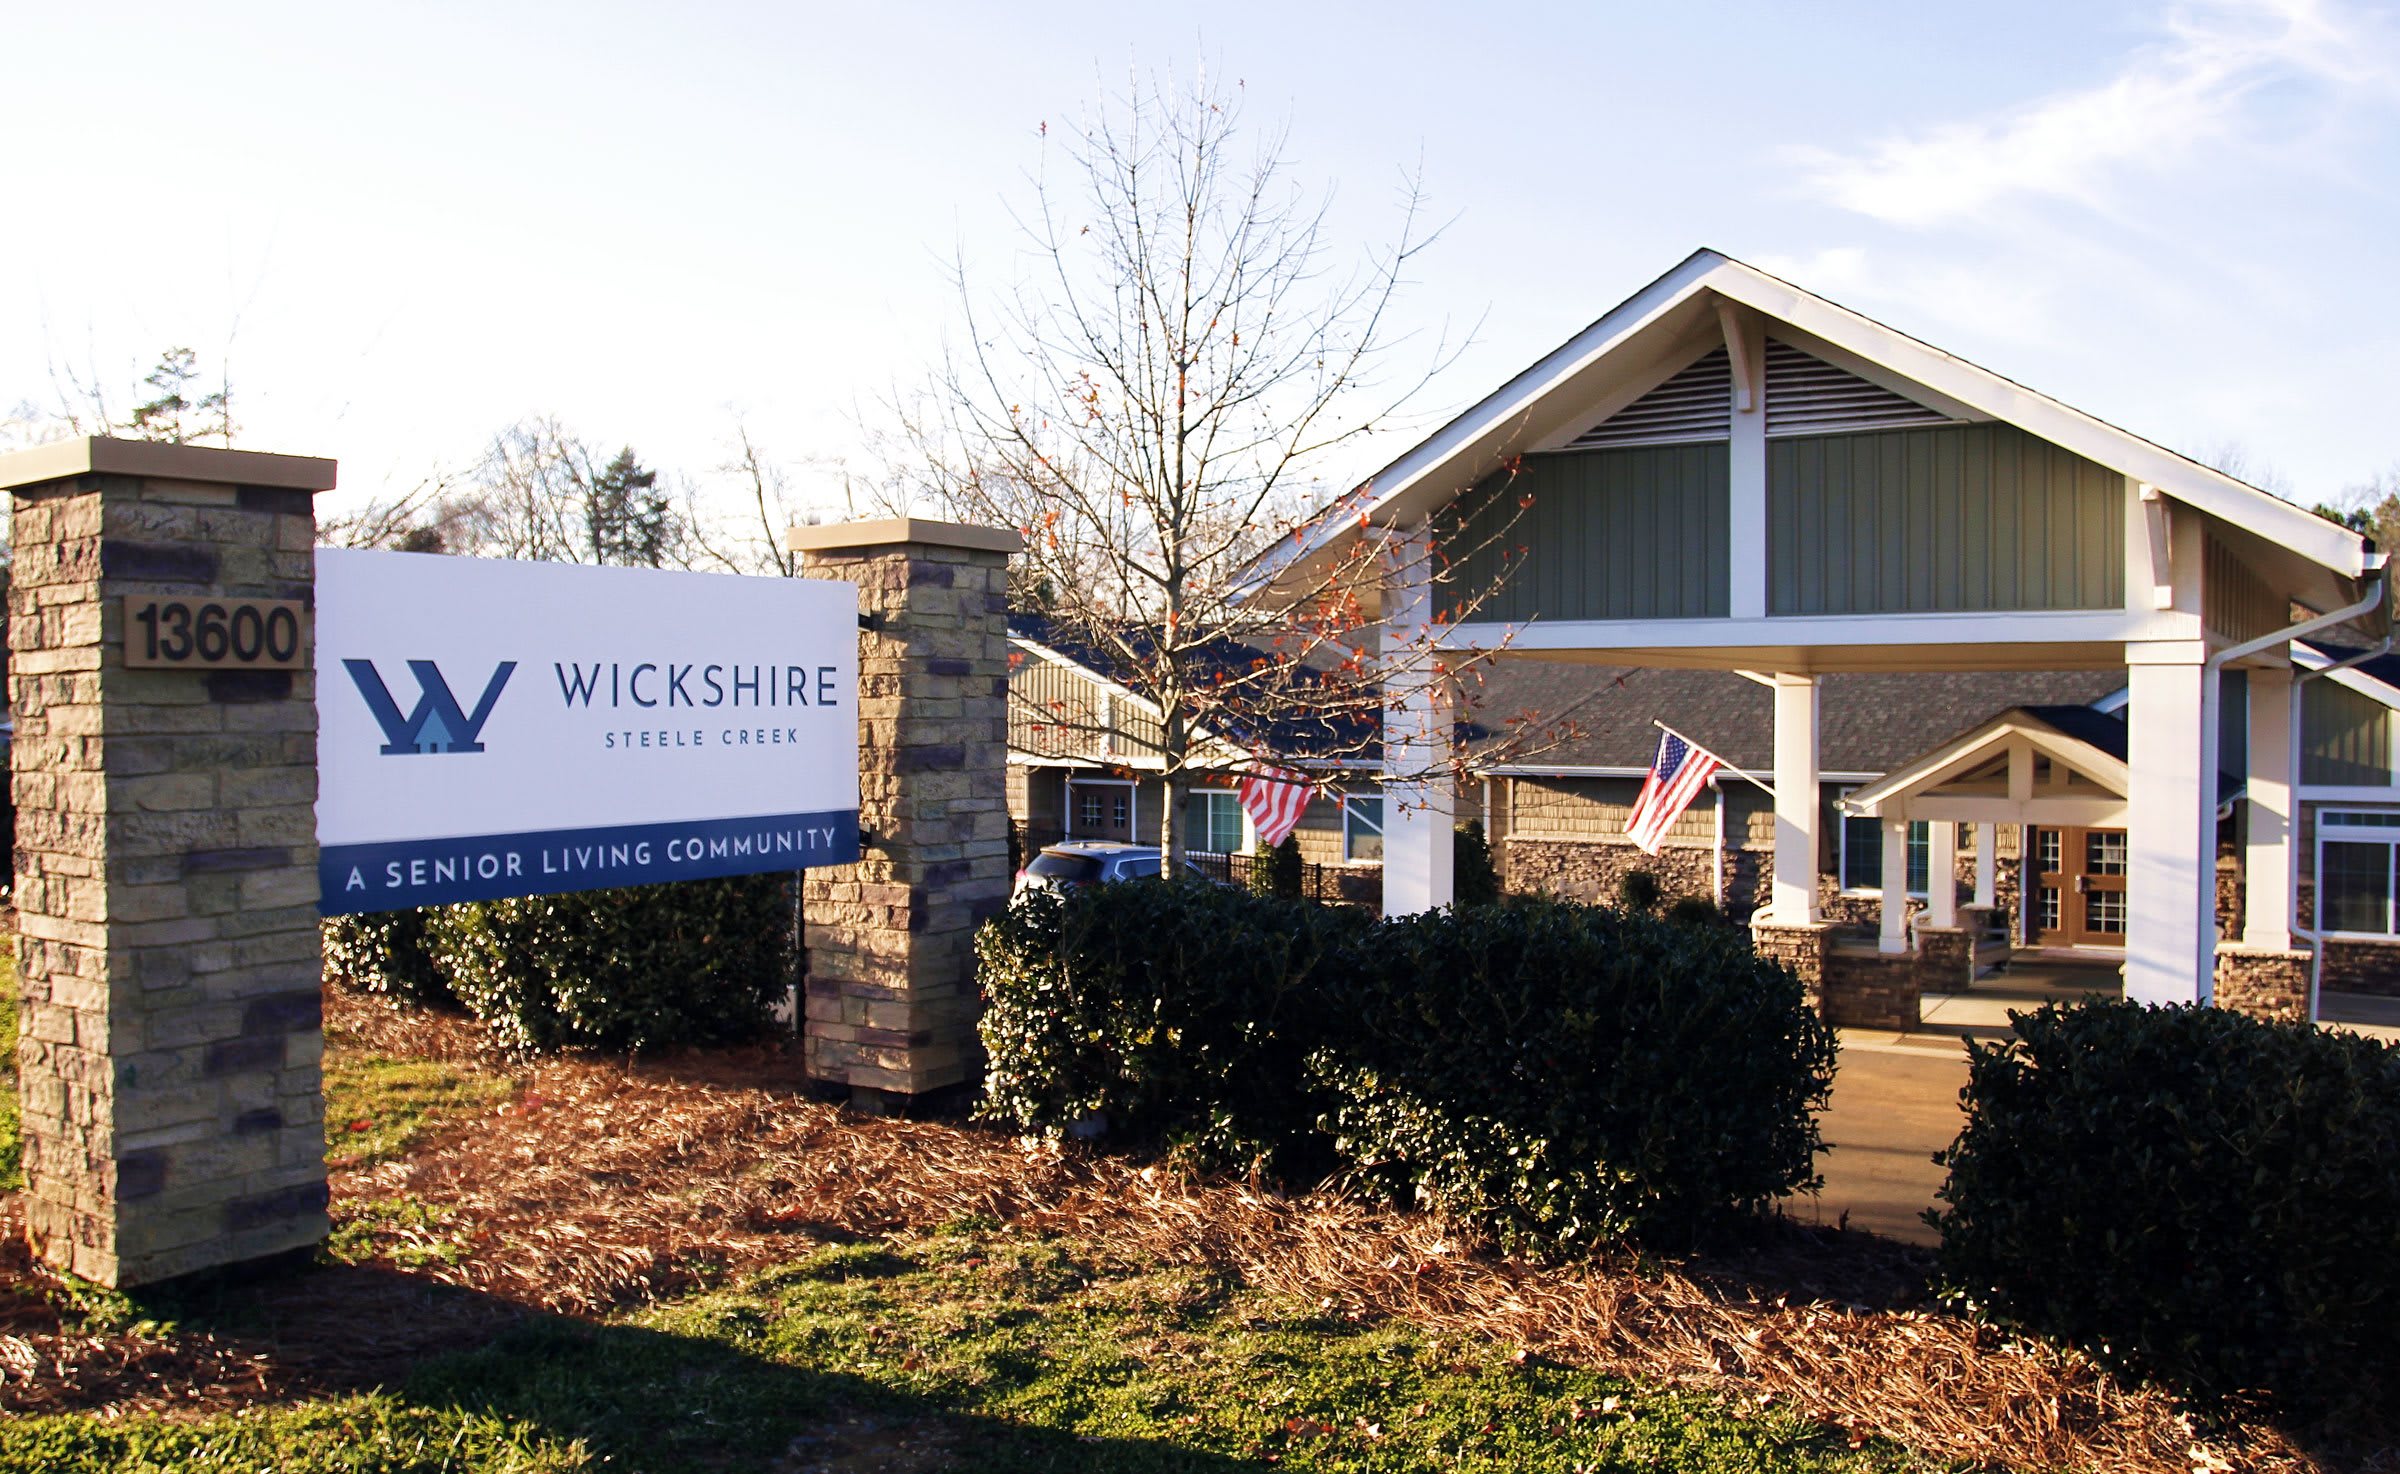 Wickshire Steele Creek community exterior